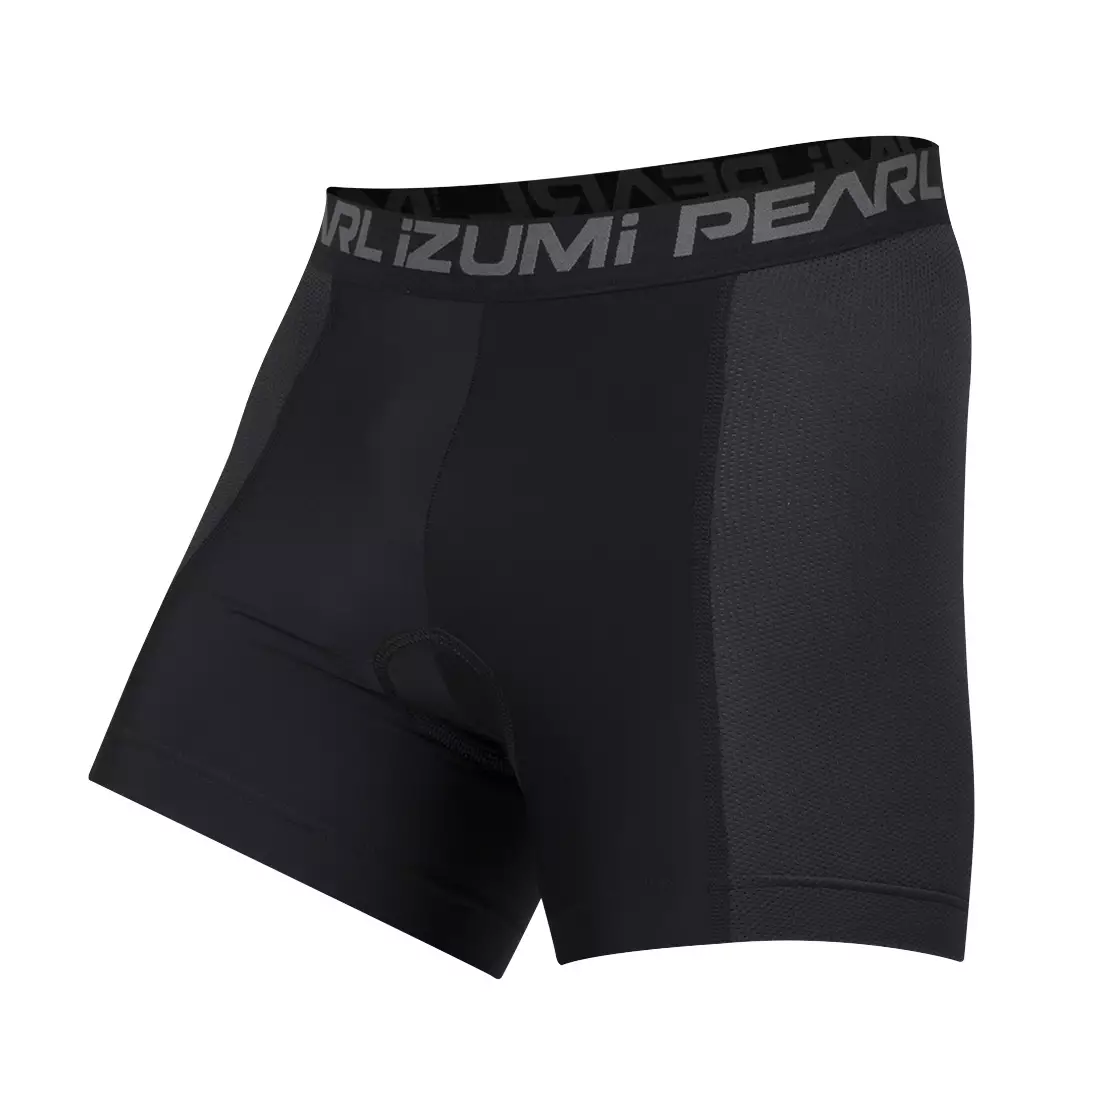 PEARL IZUMI VERSA men's inner shorts with insert 19111804